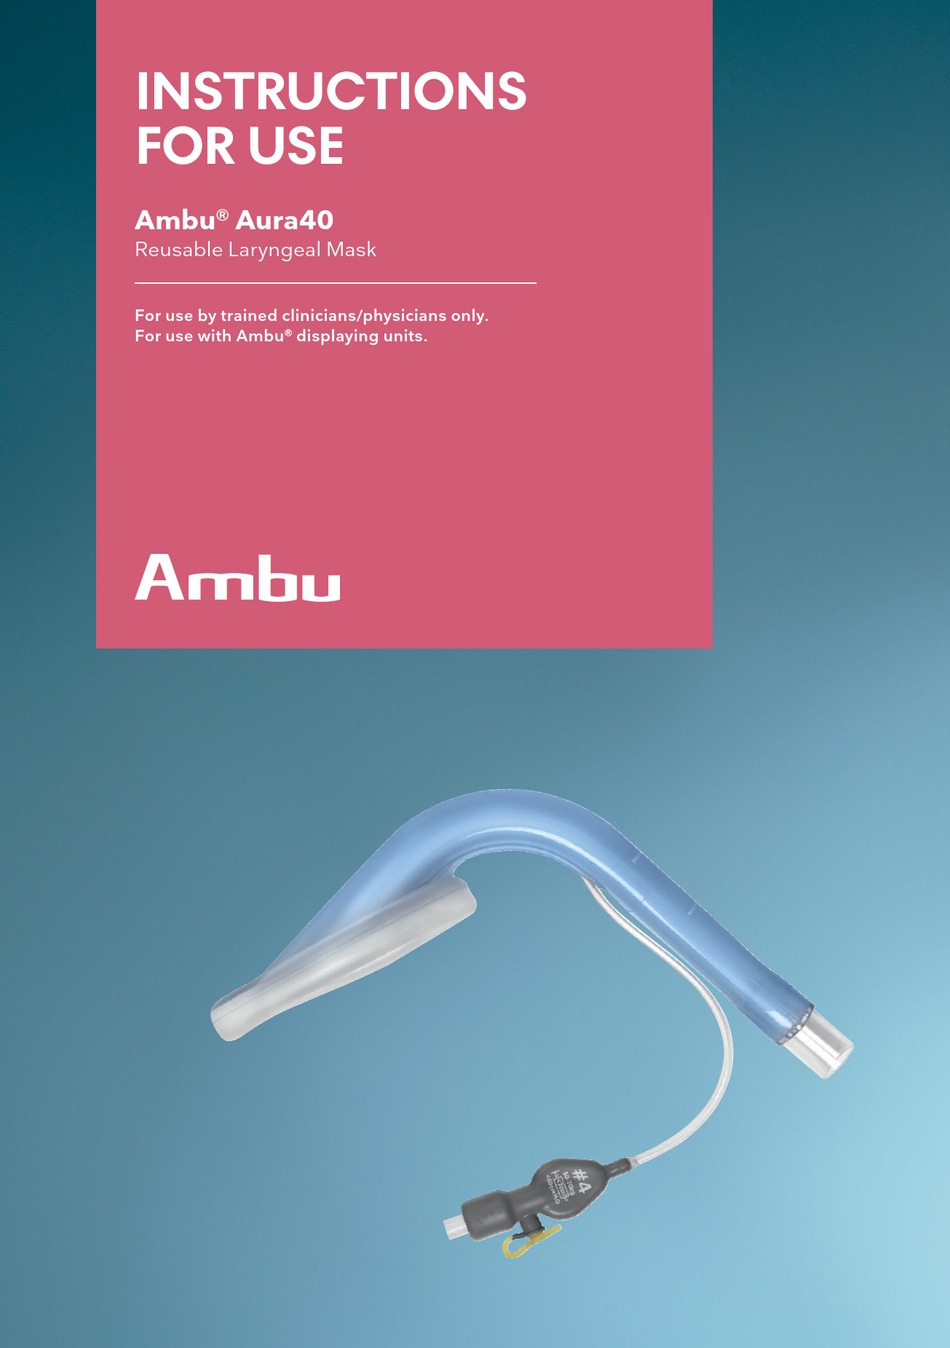 AMBU AURA40 INSTRUCTIONS FOR USE MANUAL Pdf Download ManualsLib